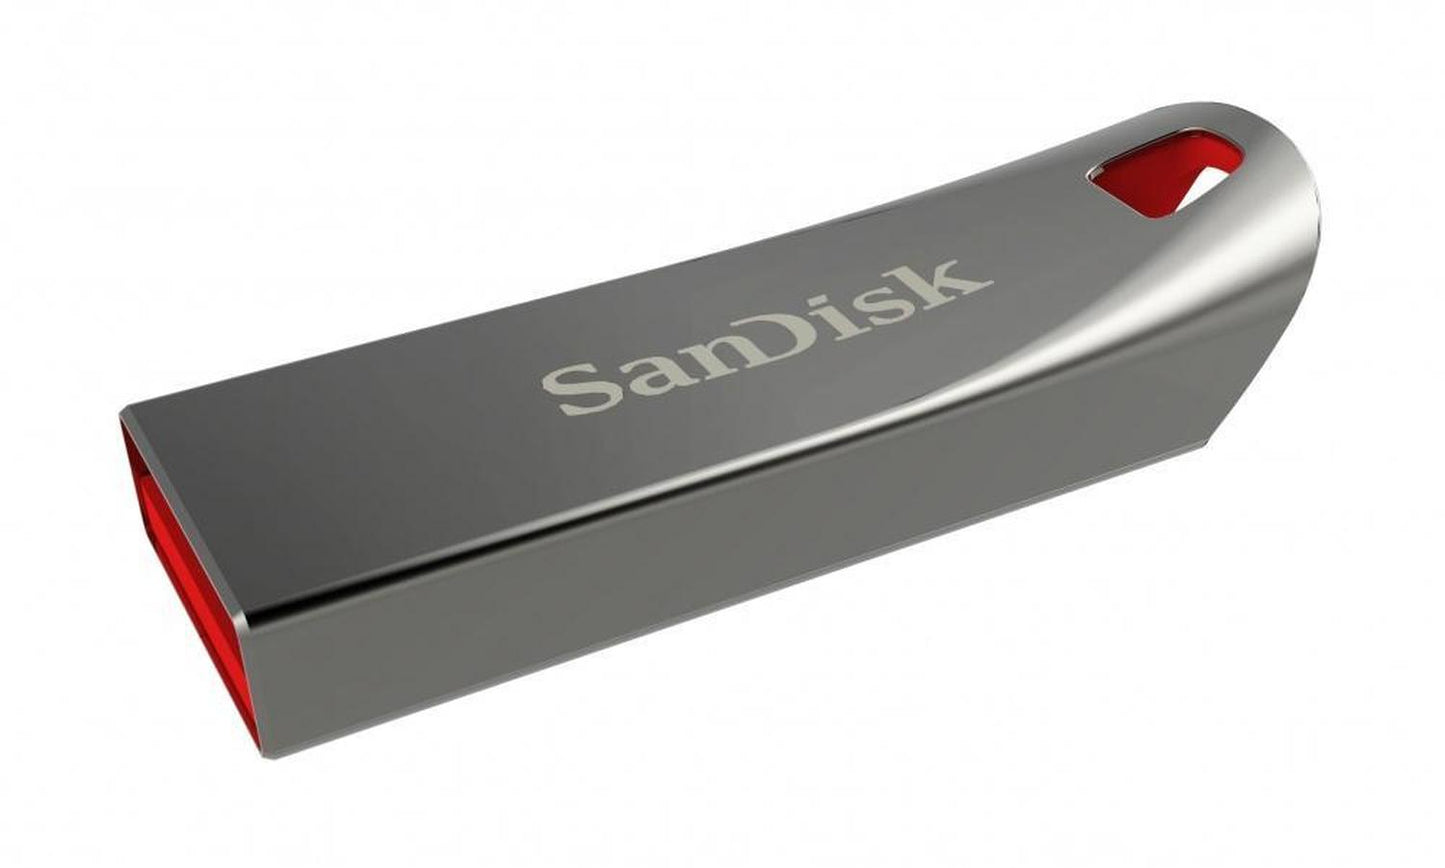 Memoria USB SanDisk Cruzer Force Z71, 16GB, USB 2.0